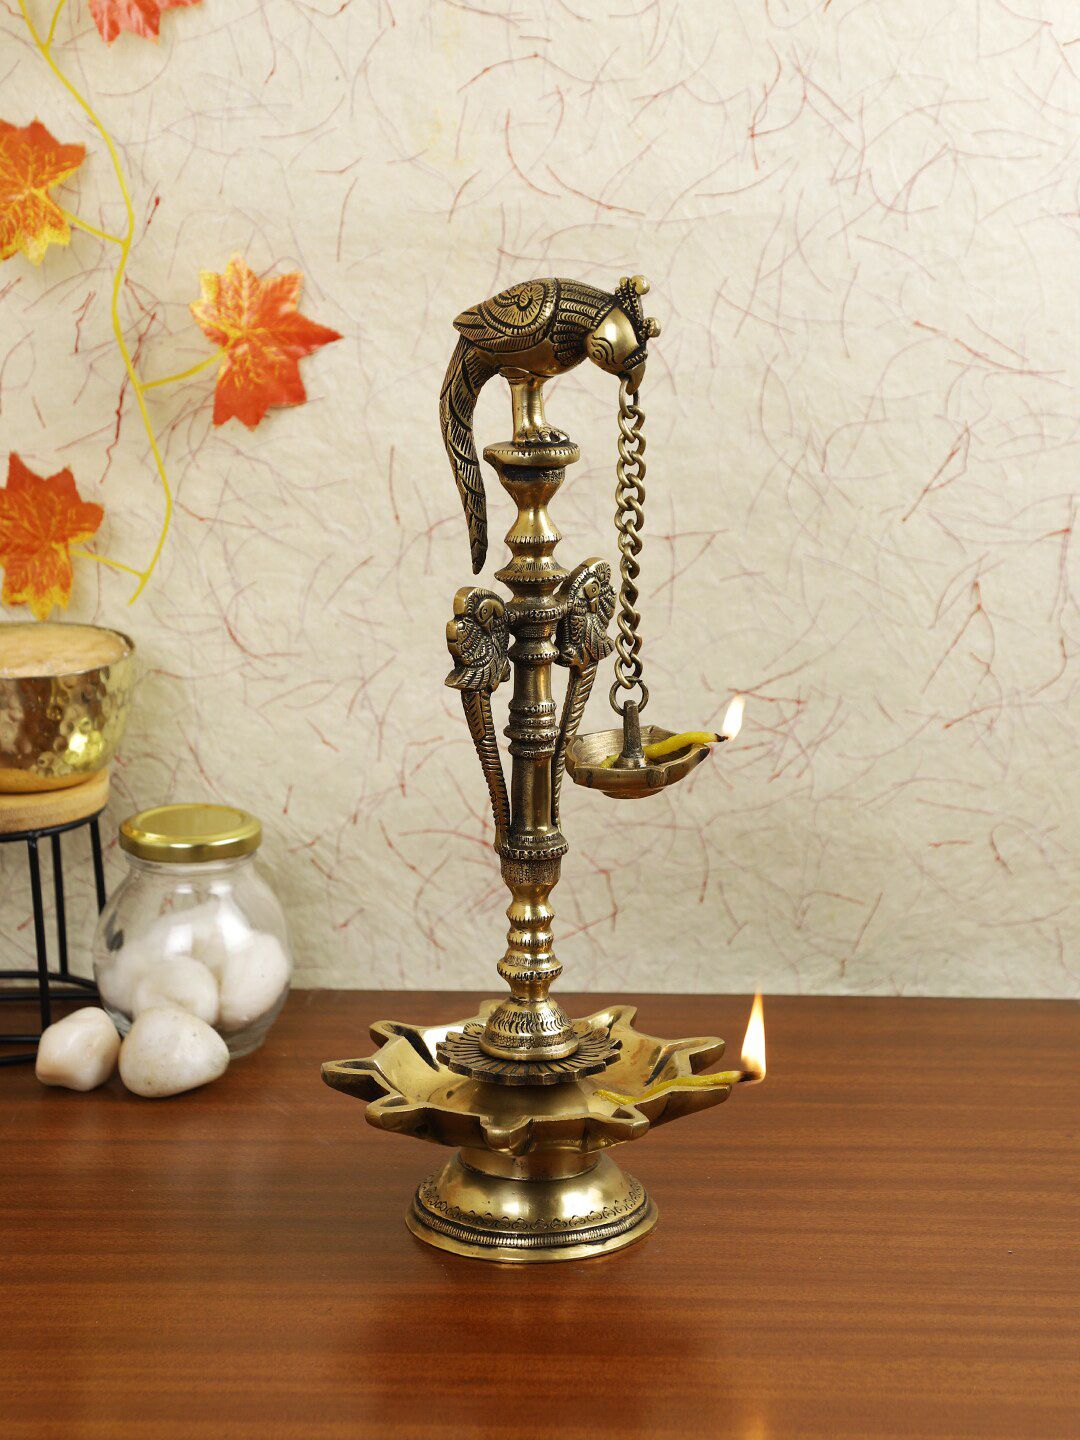 Imli Street Gold Toned Brass Big Twin Parrot Lamp With Chain Diya Price in India